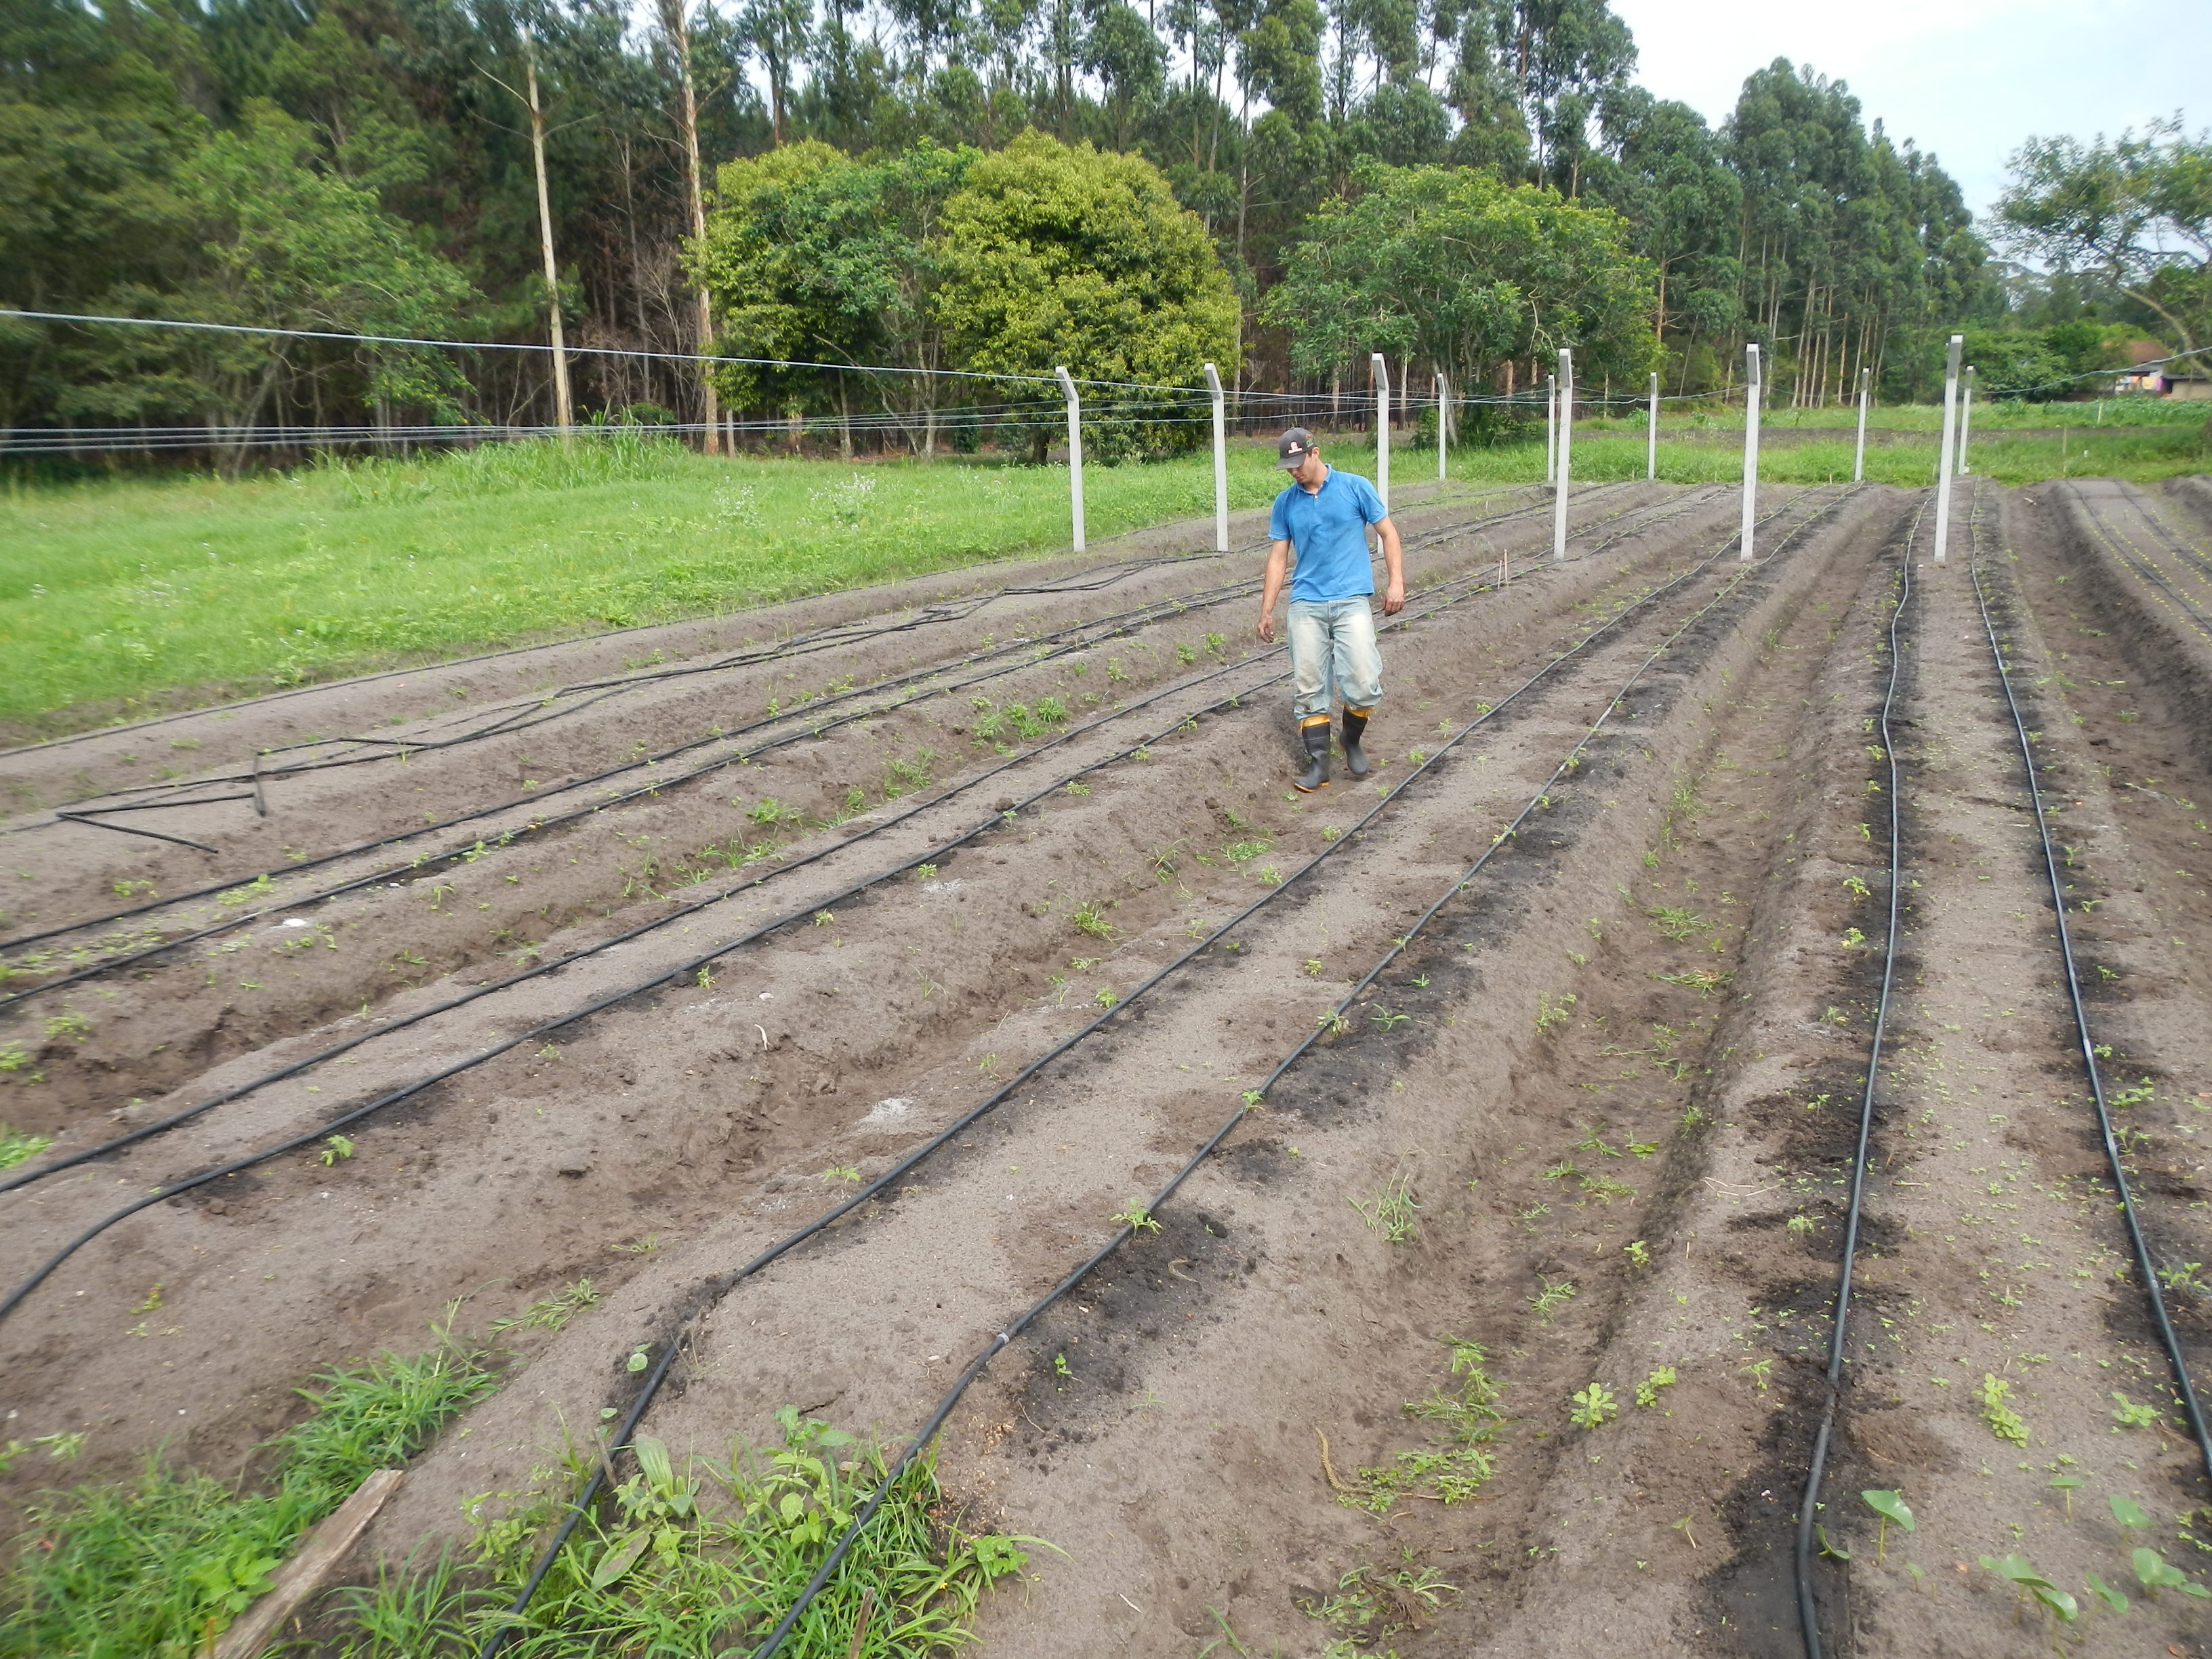 20121029 Fazenda Horta Plantio Tomateiro experimento fitopatolog 001.jpg